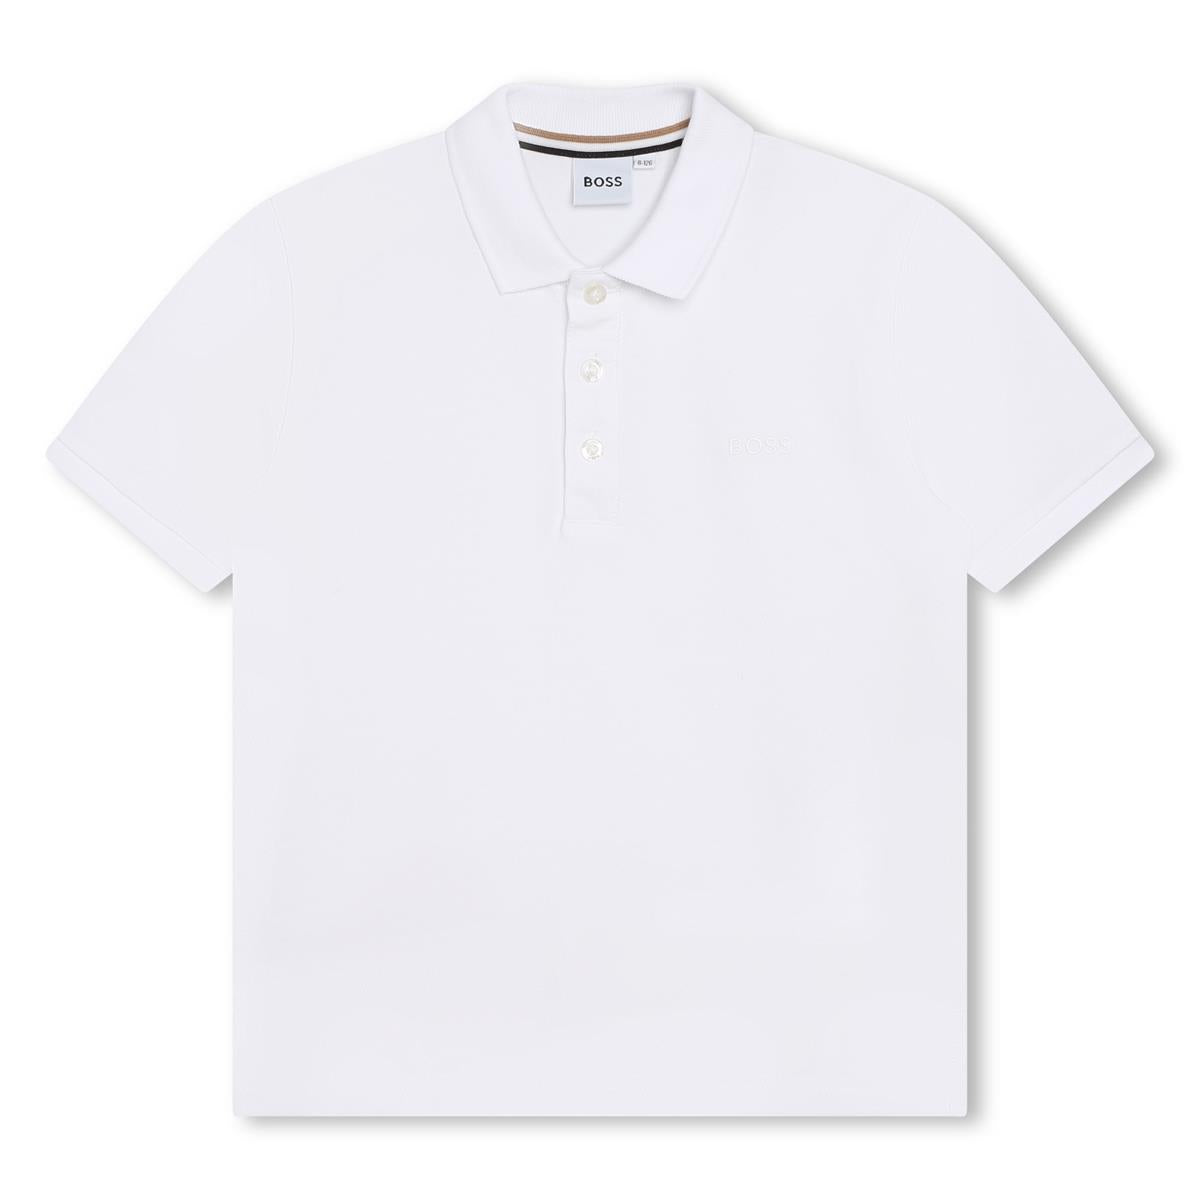 Boys White Polo Shirt